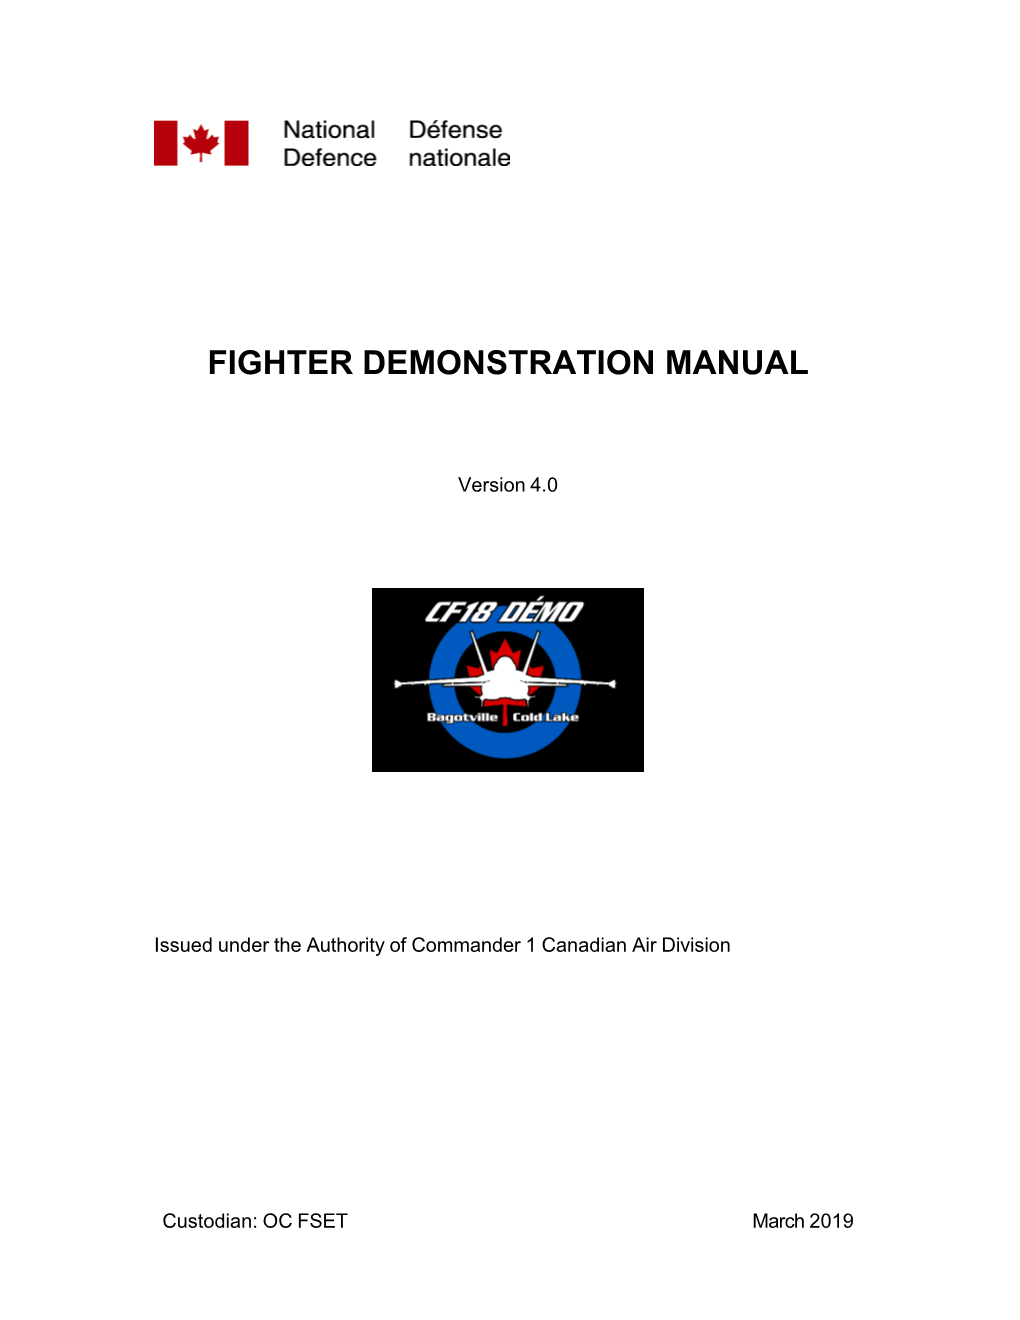 CF-18 Fighter Demonstration Manual